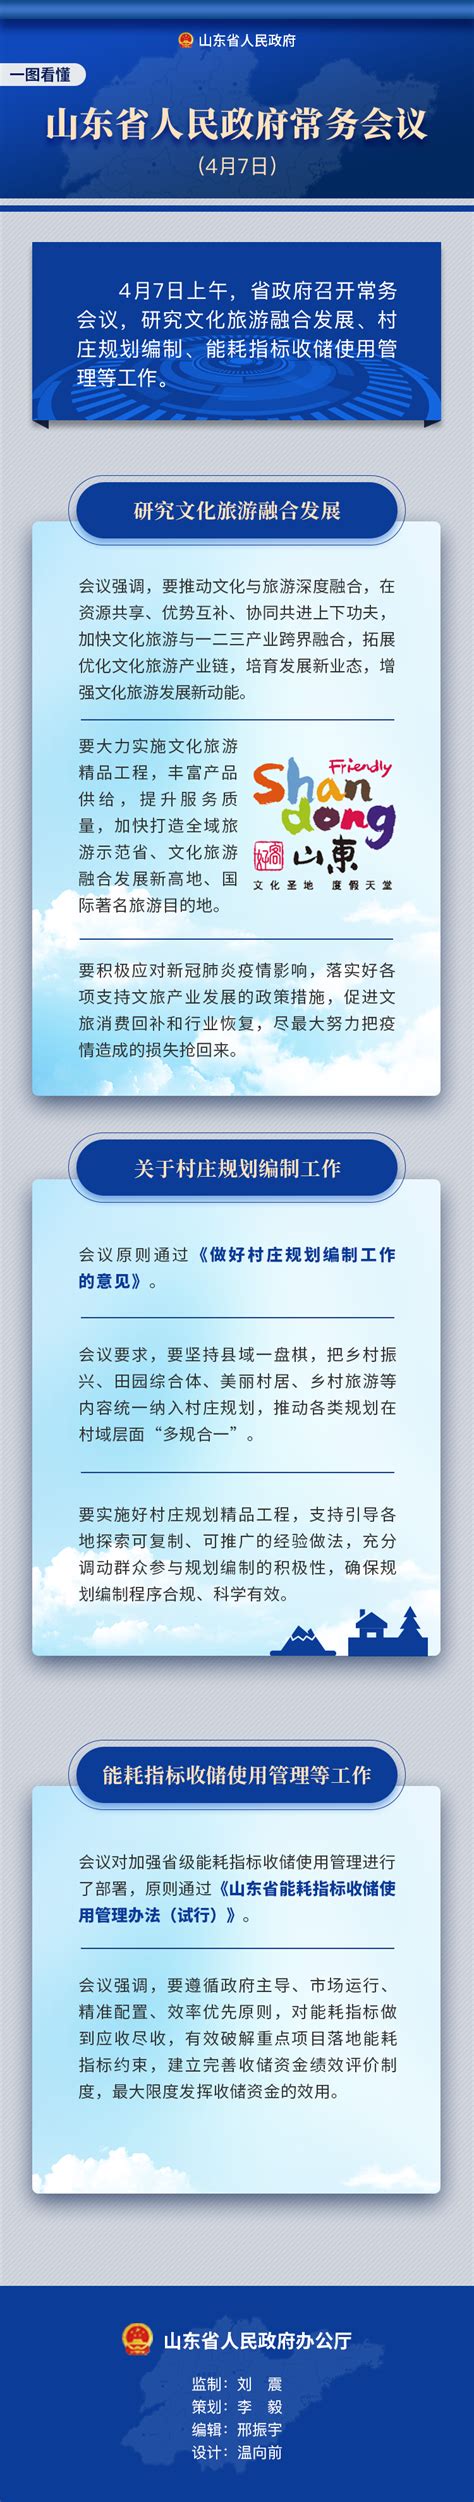 山东省人民政府_www.shandong.gov.cn